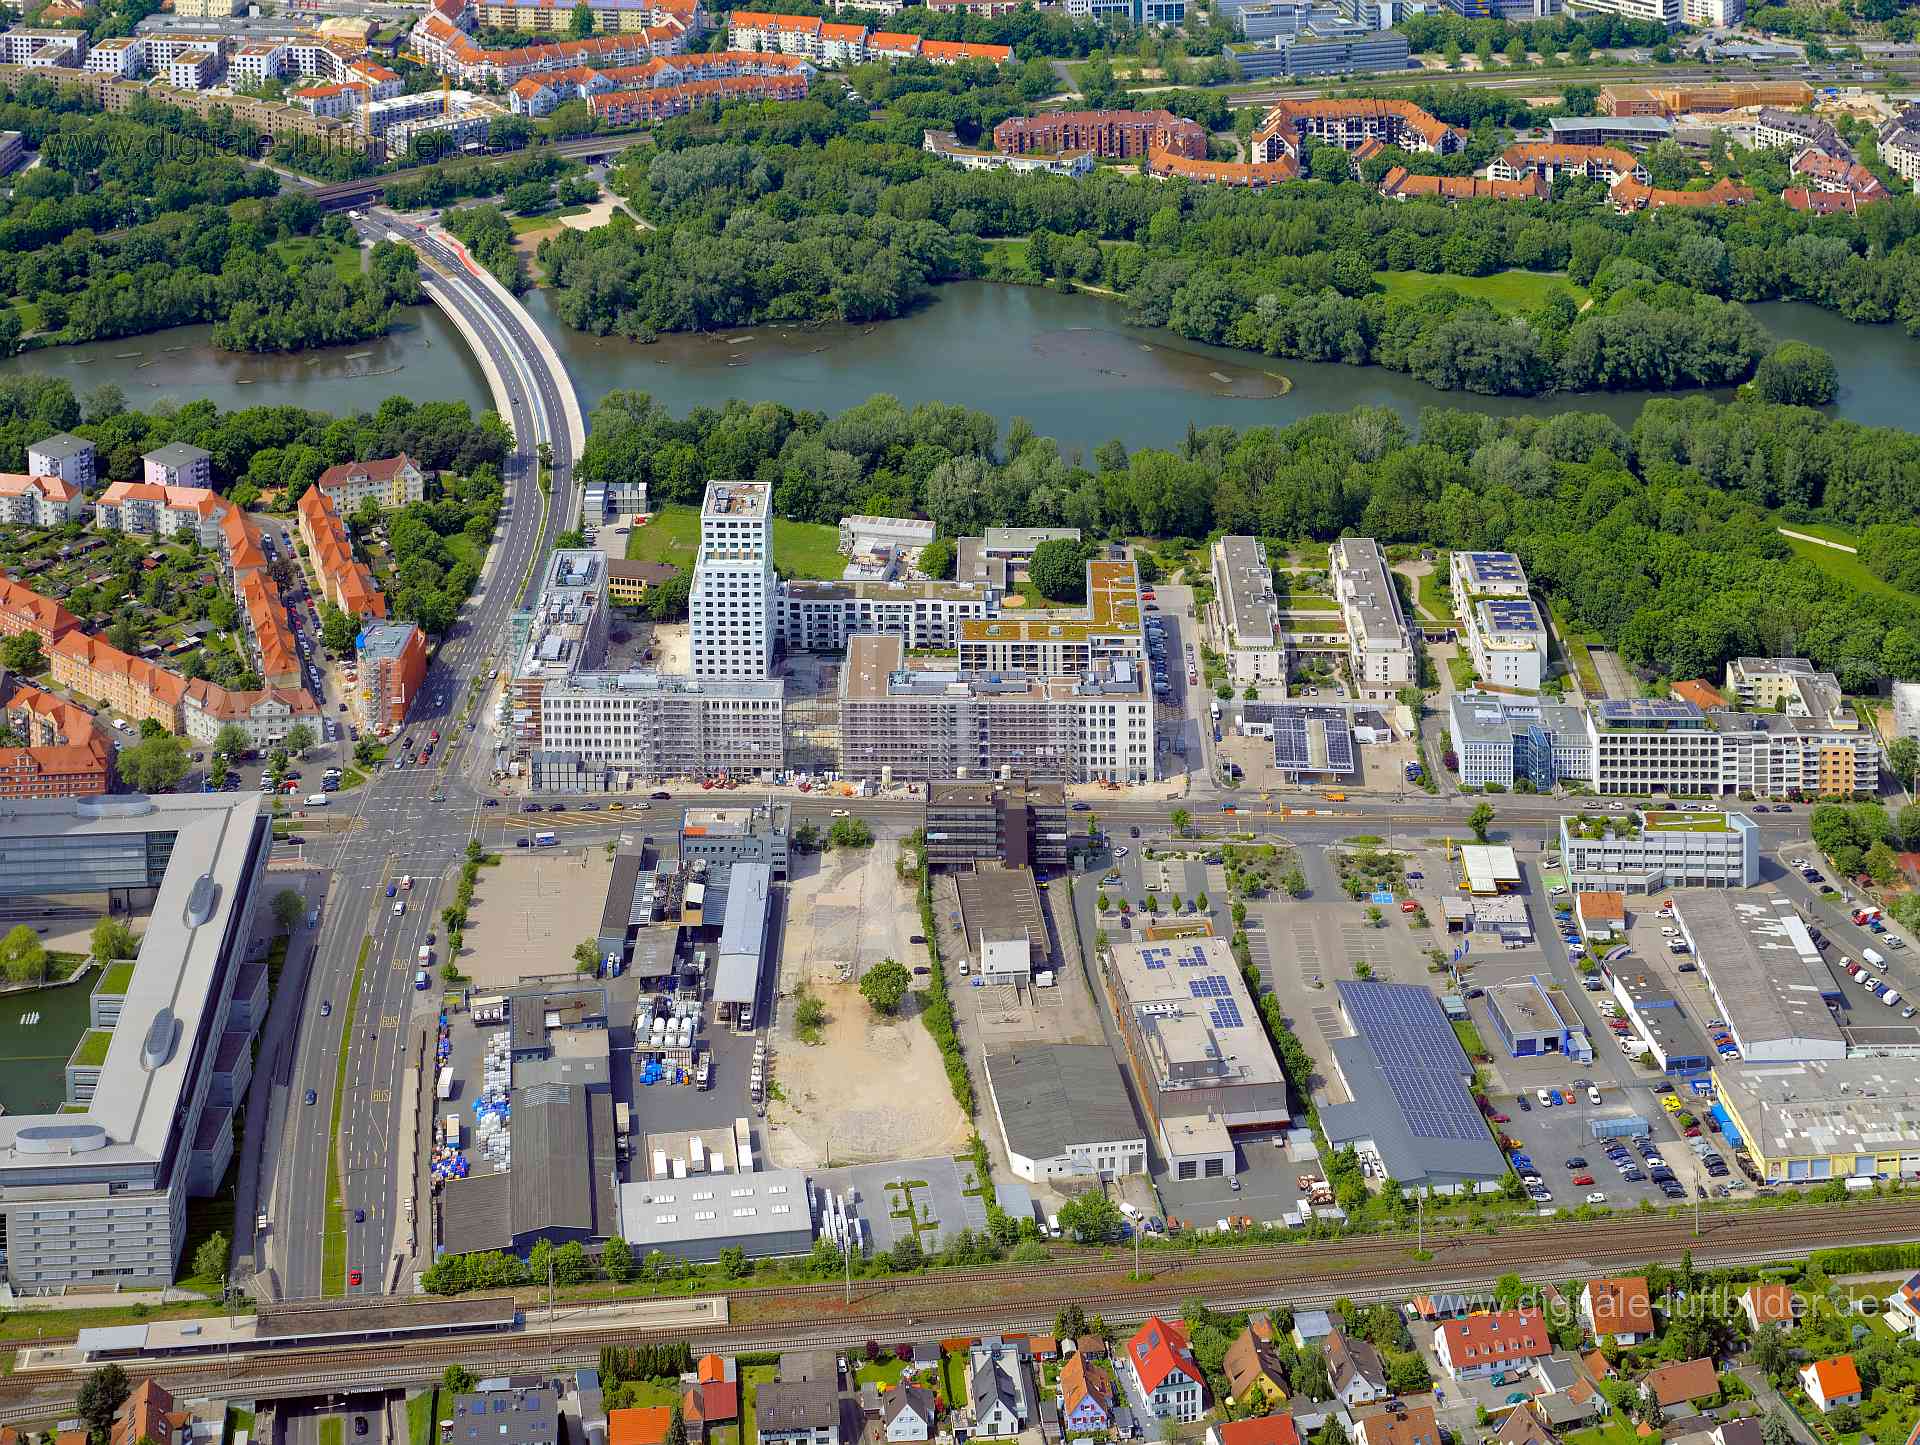 Luftbild - Ostendstraße, Ort: Nürnberg, Tags: Seetor City Campus, Sontowski & Partner, Wöhrder See, Neubau, Hochhaus, , , ...